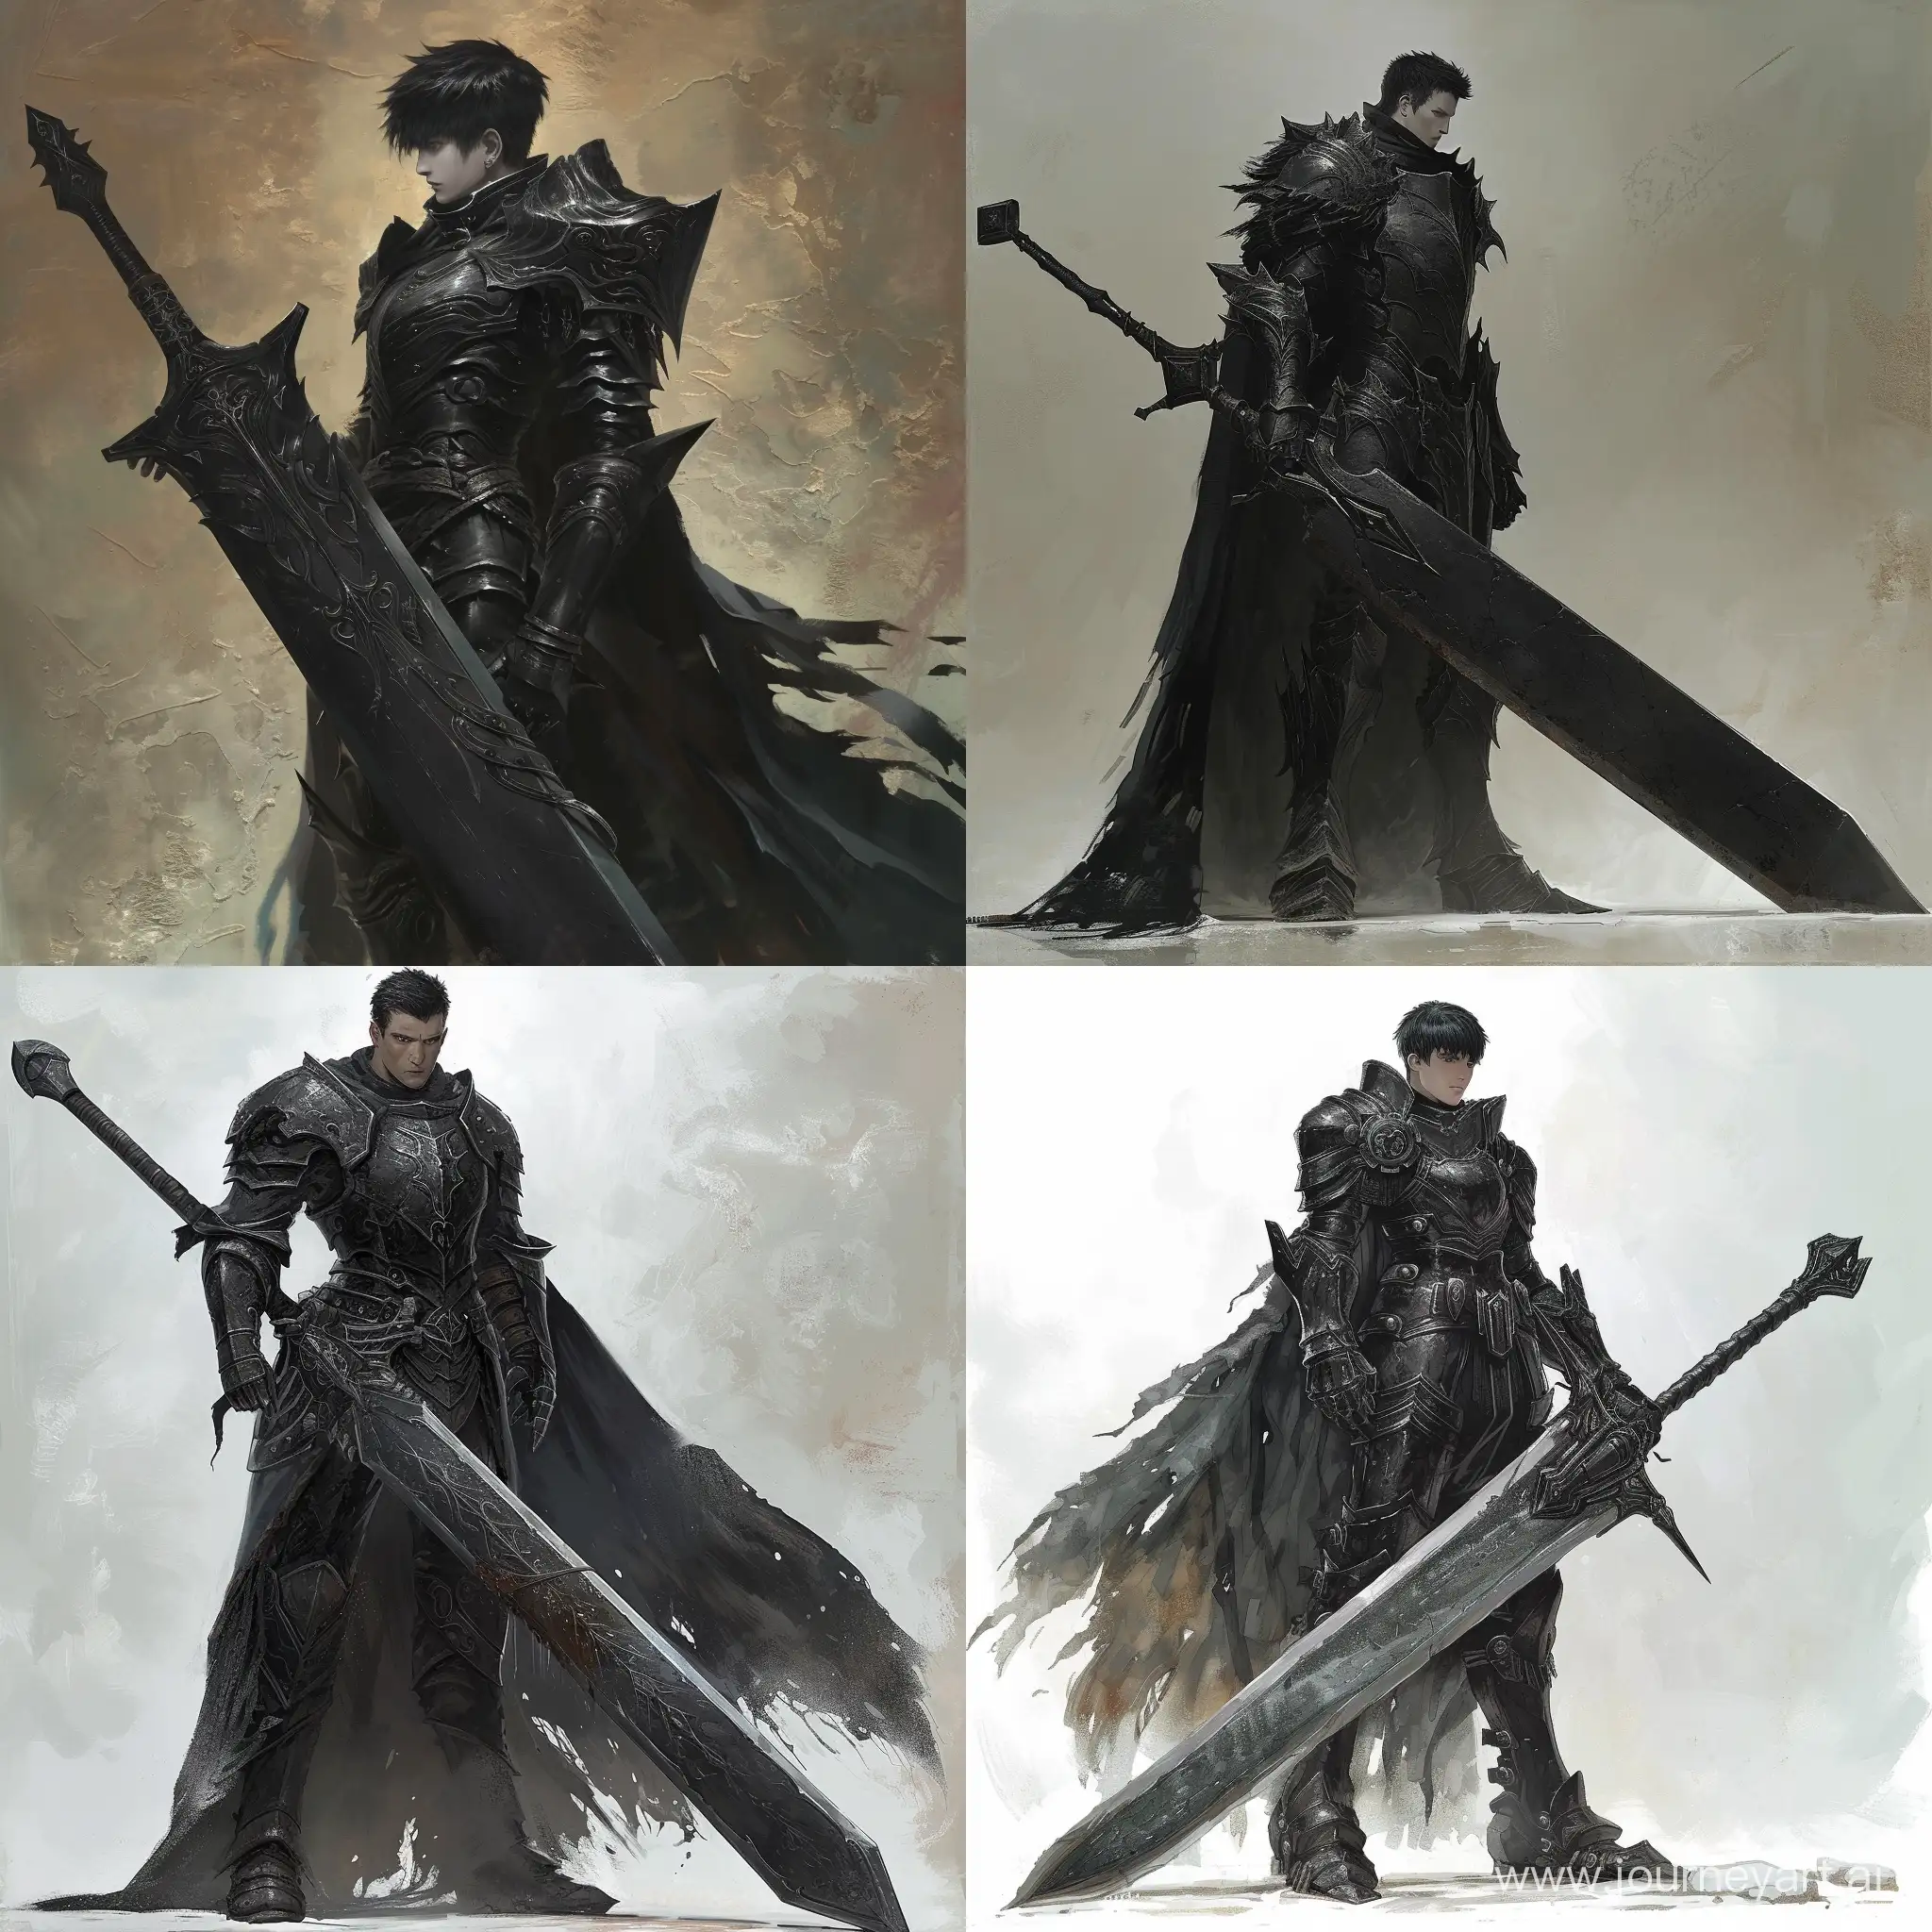 Mysterious-Black-Knight-wielding-a-Massive-Sword-in-Dark-Fantasy-Art